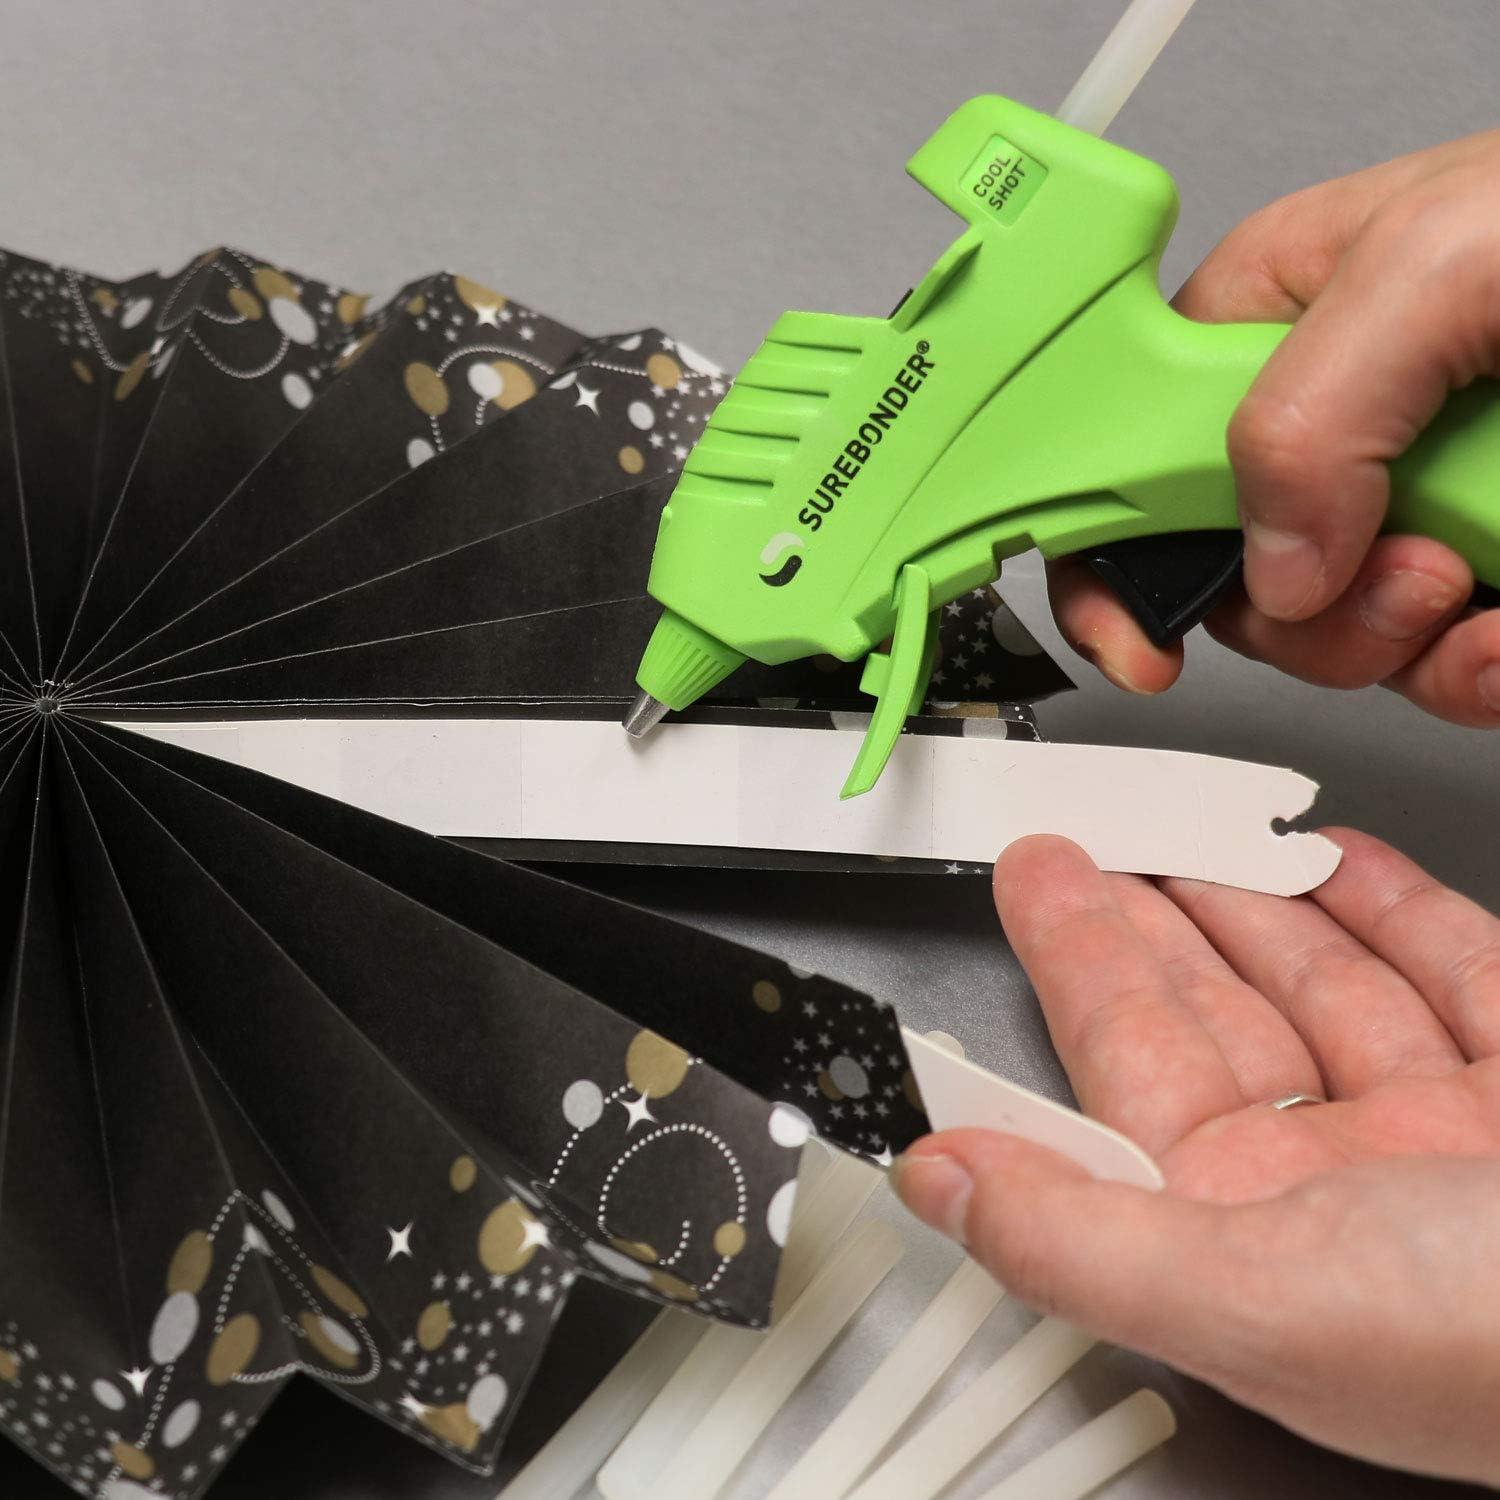  Surebonder CS15 CoolShot Low Temp Glue Sticks, 4, 15 per Pack  (FPRCS15) : Arts, Crafts & Sewing